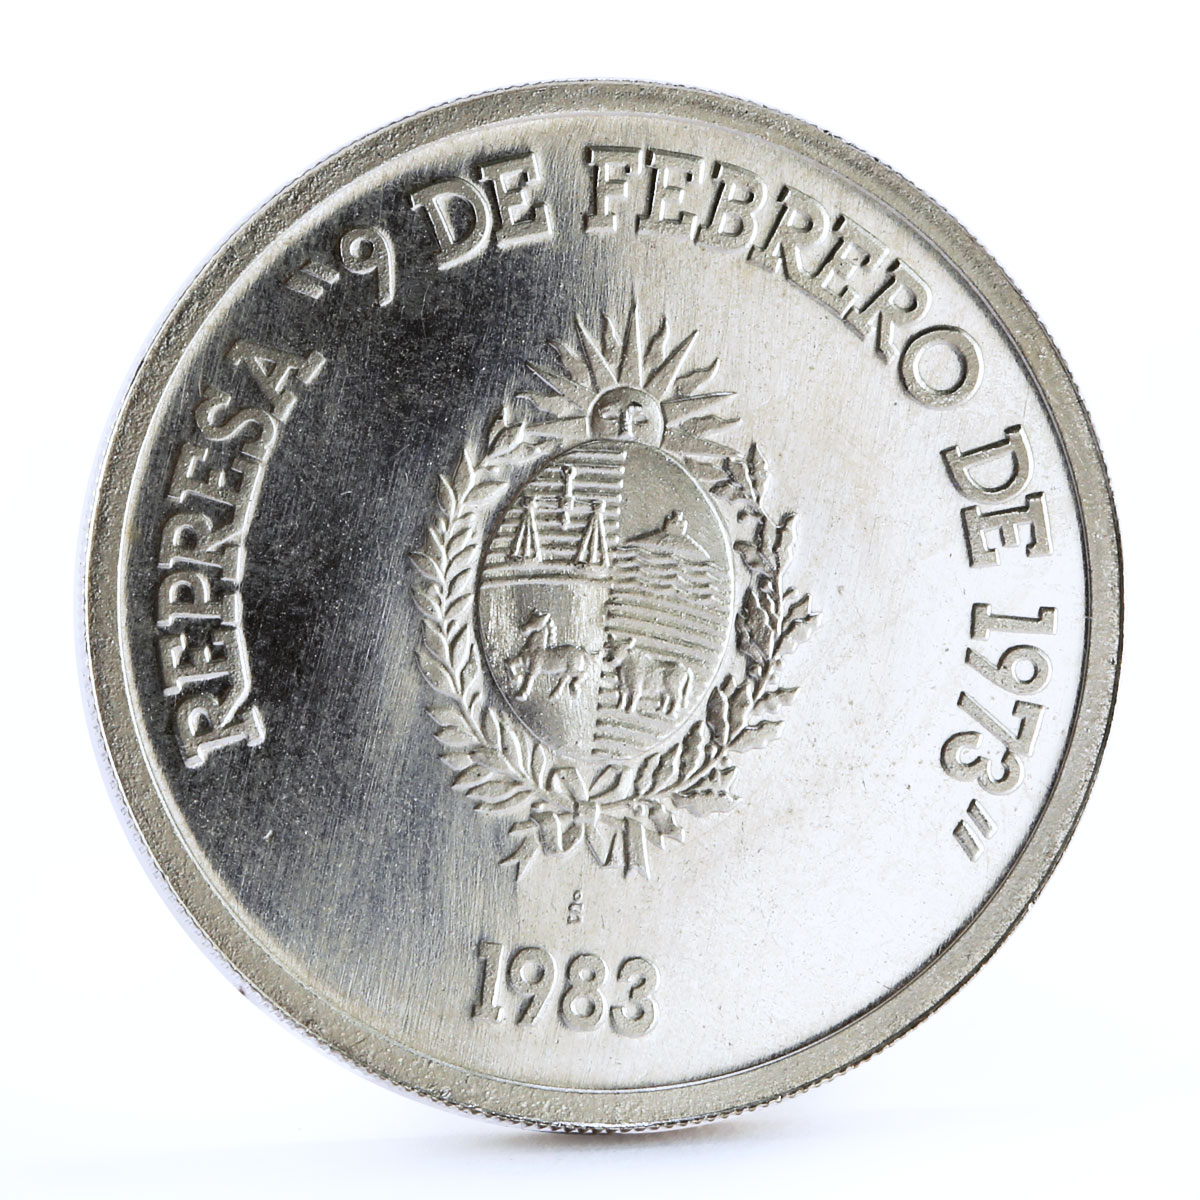 Uruguay 500 pesos Hydroelectric Dam silver coin 1983